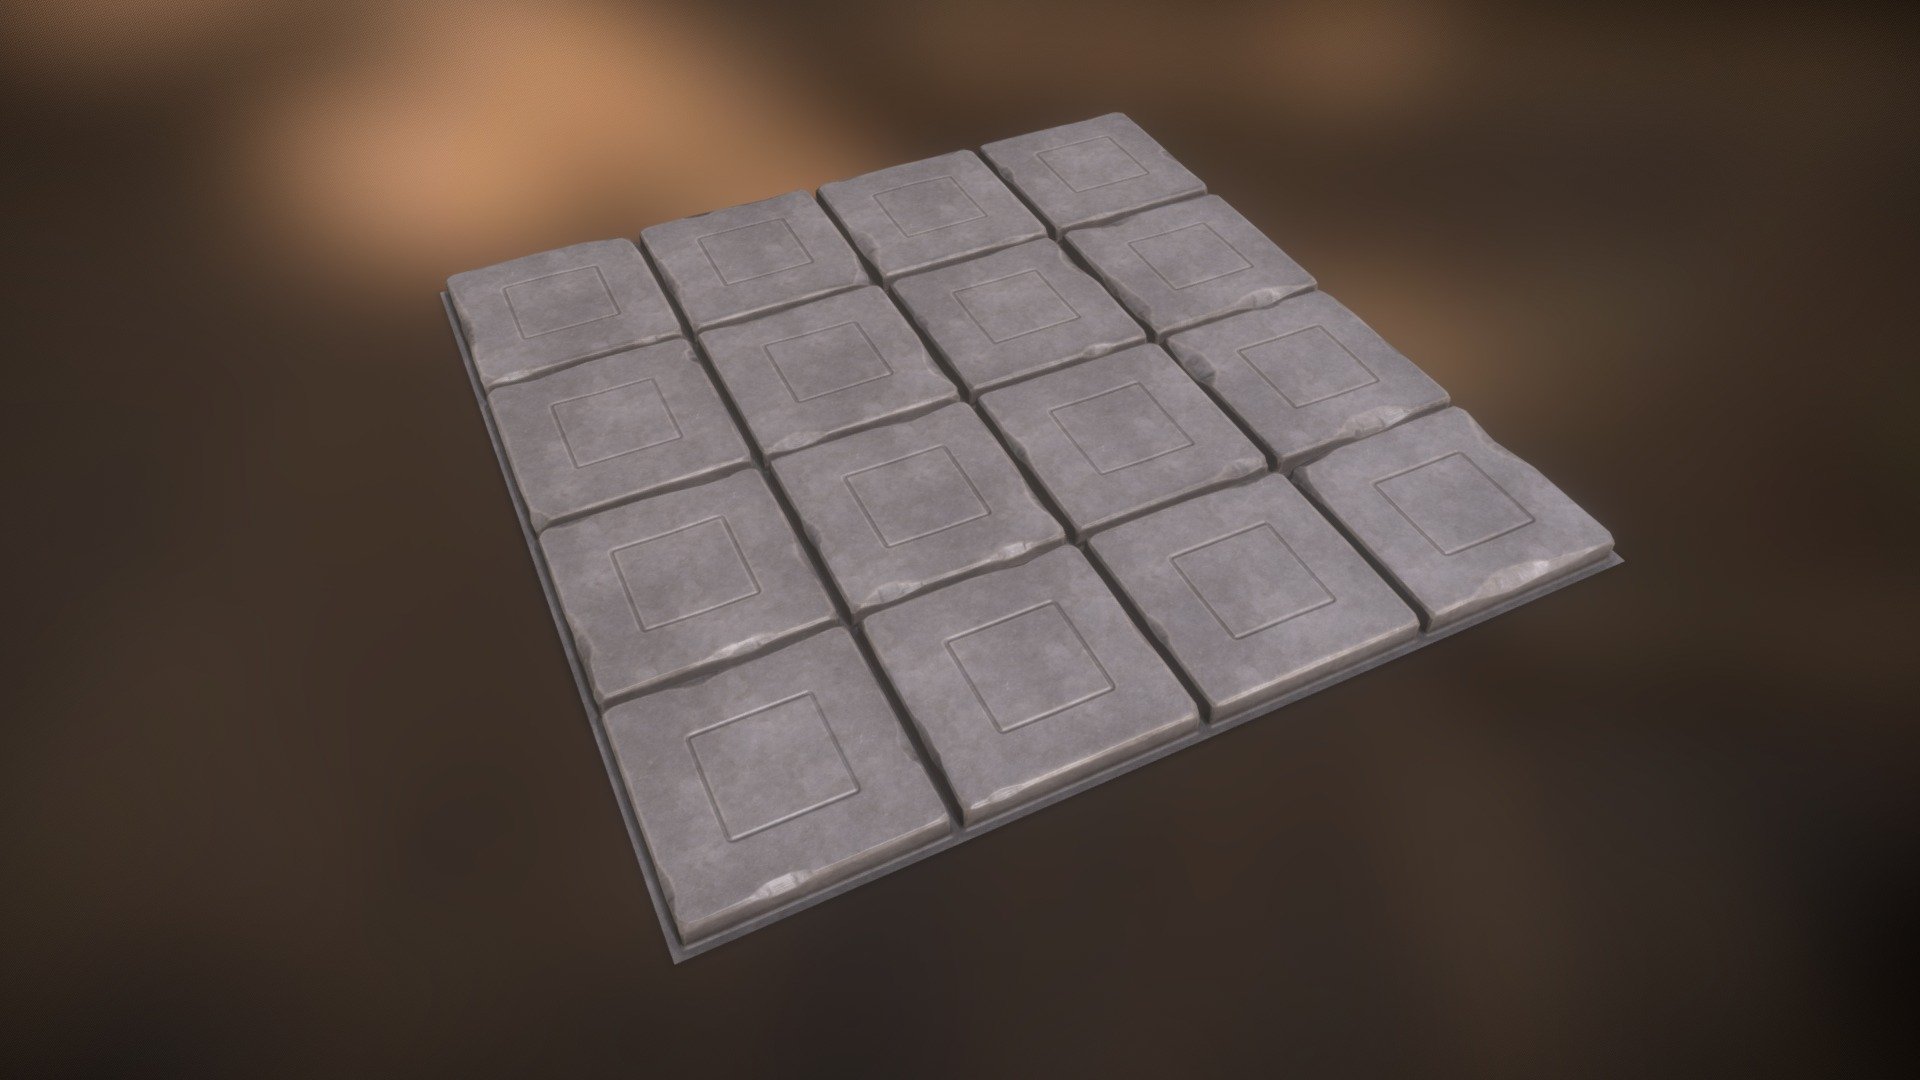 Stone Tiles 3D model
PBR texture set - Stone Tiles - Buy Royalty Free 3D model by captainapoc 3d model